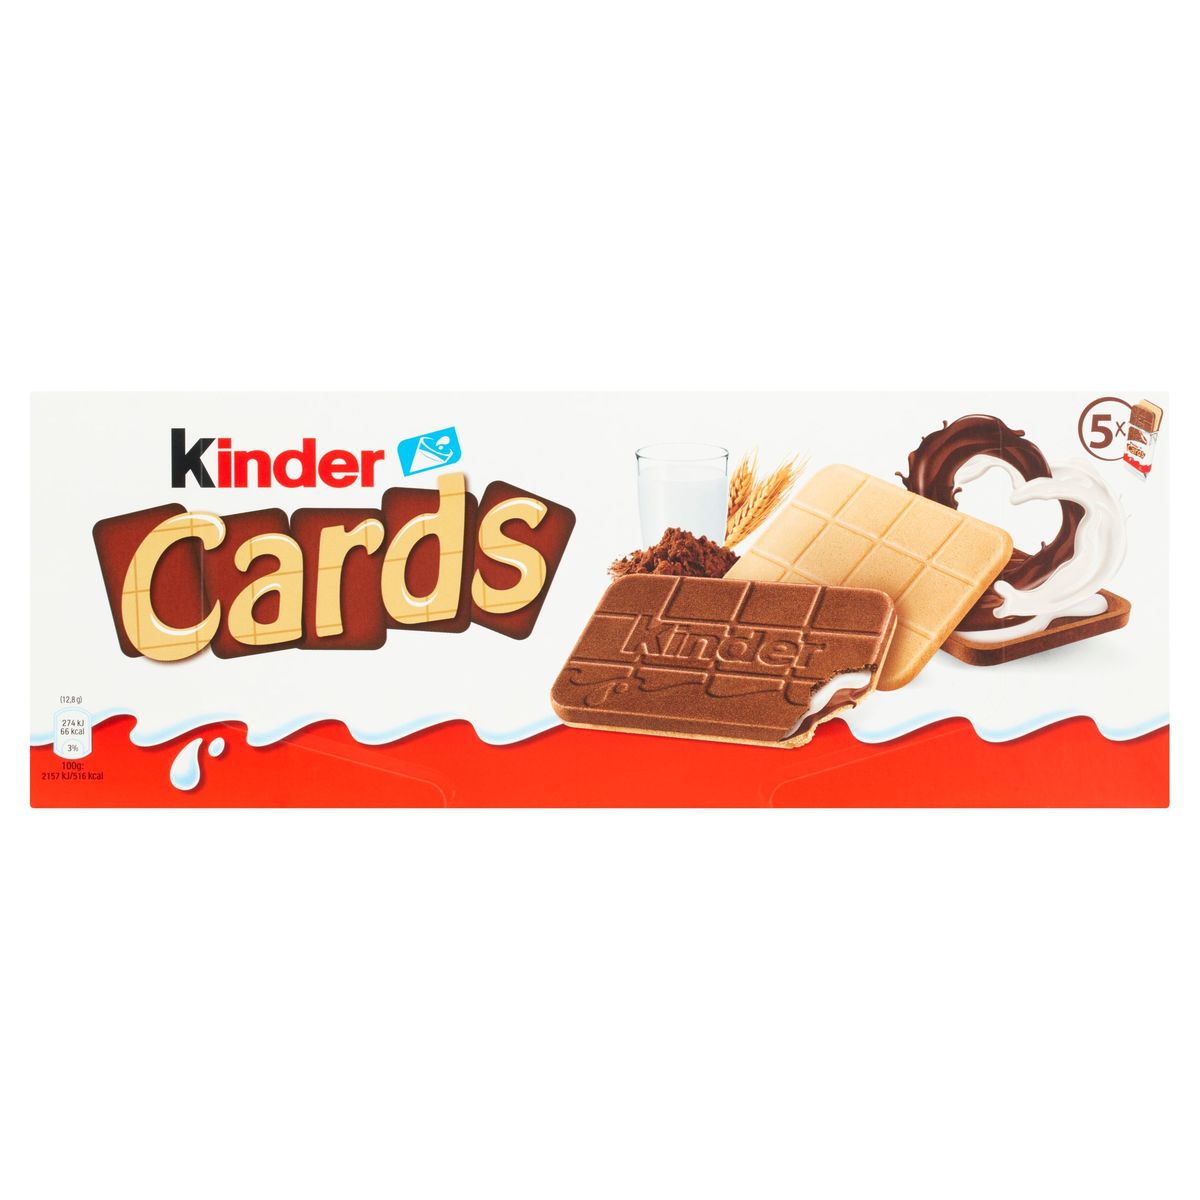 Kinder Cards, 25.6g : Snacks fast delivery by App or Online